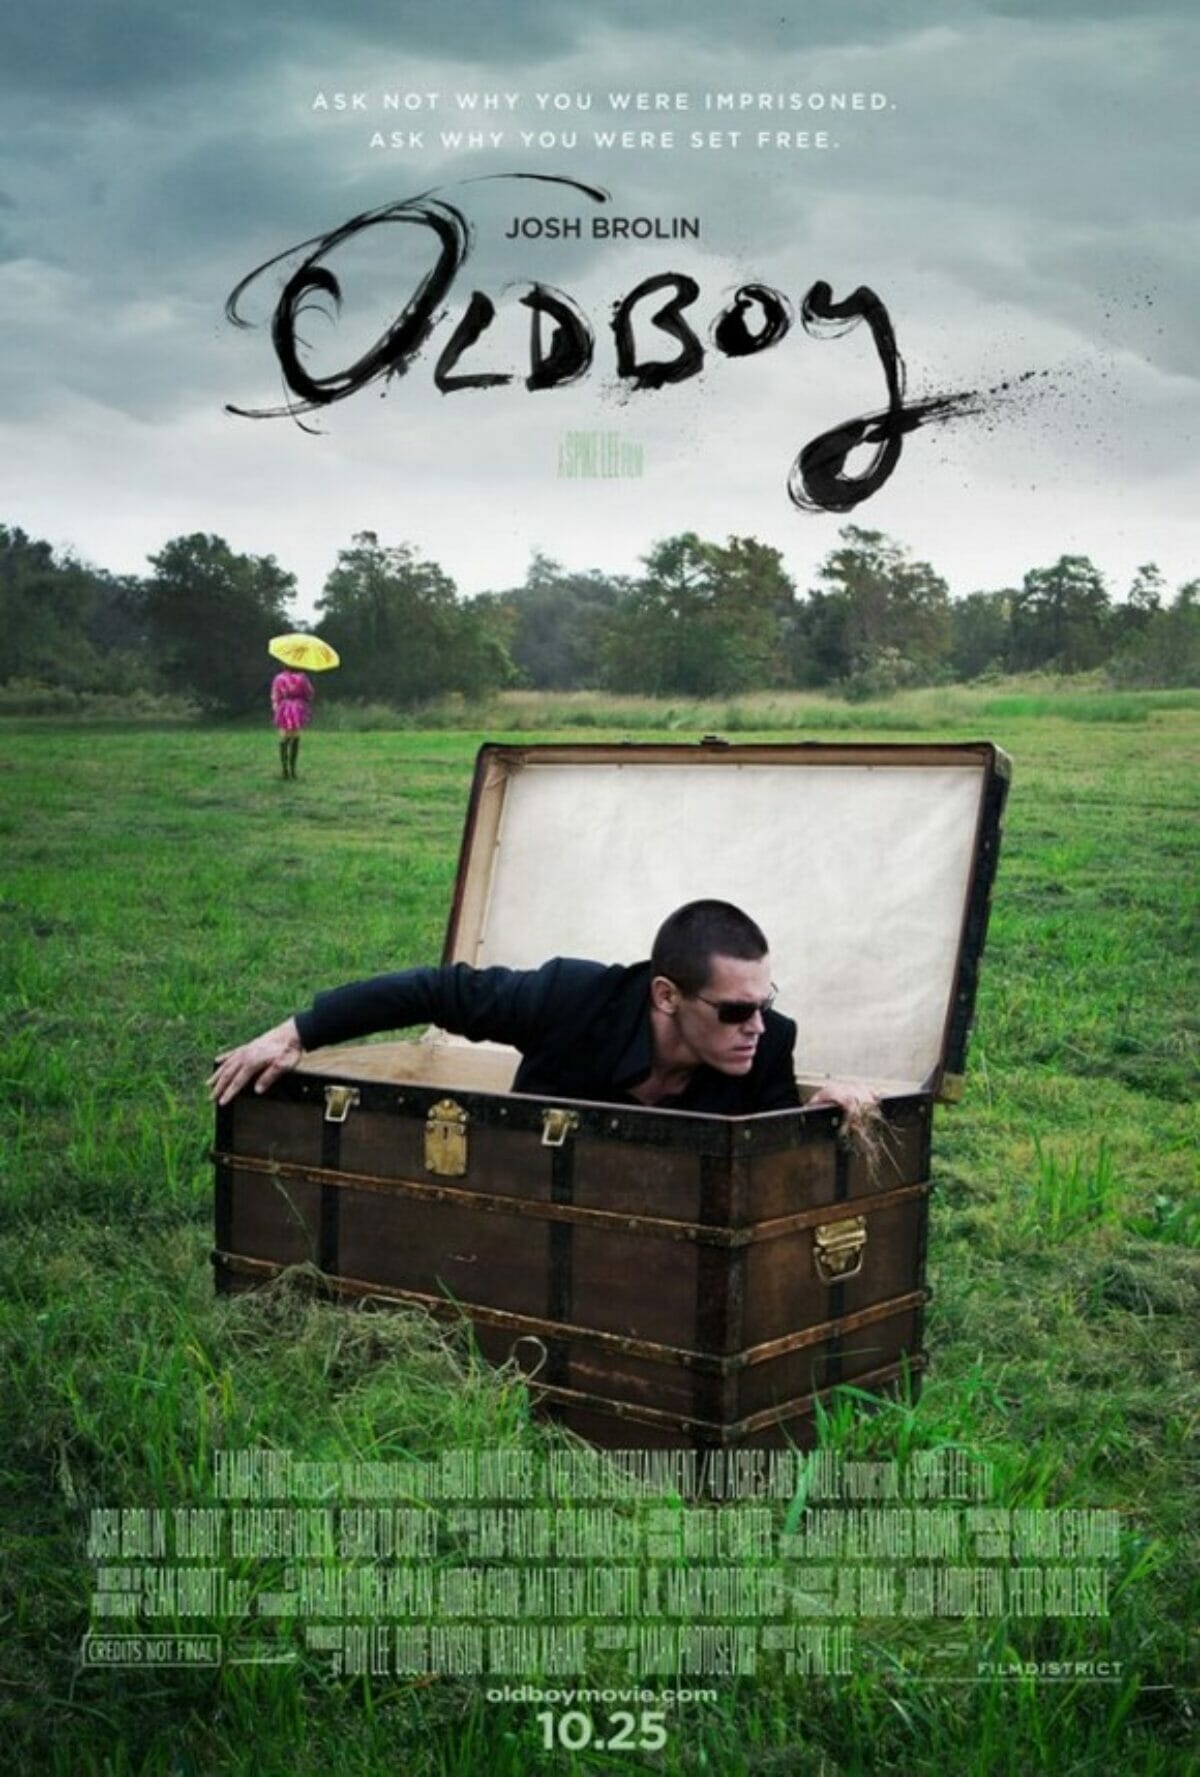 Oldboy-Poster